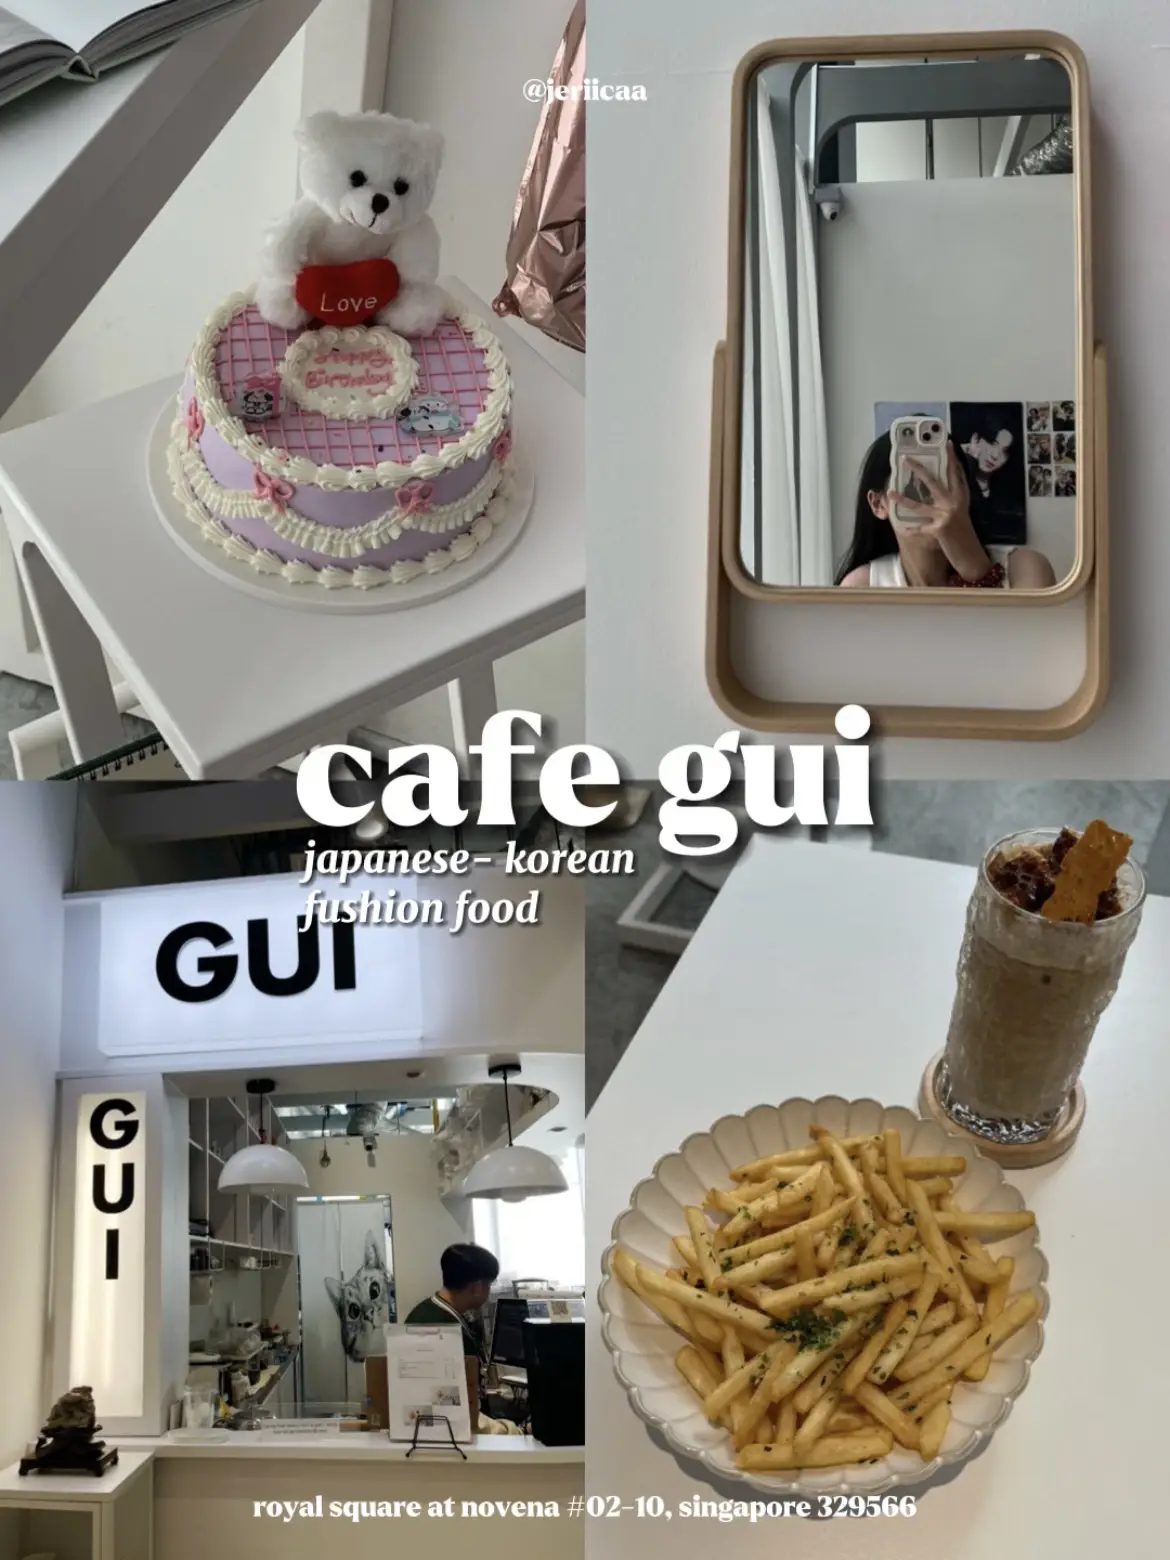 hidden JAPANESE-KOREAN fusion cafe at novena 🍜's images